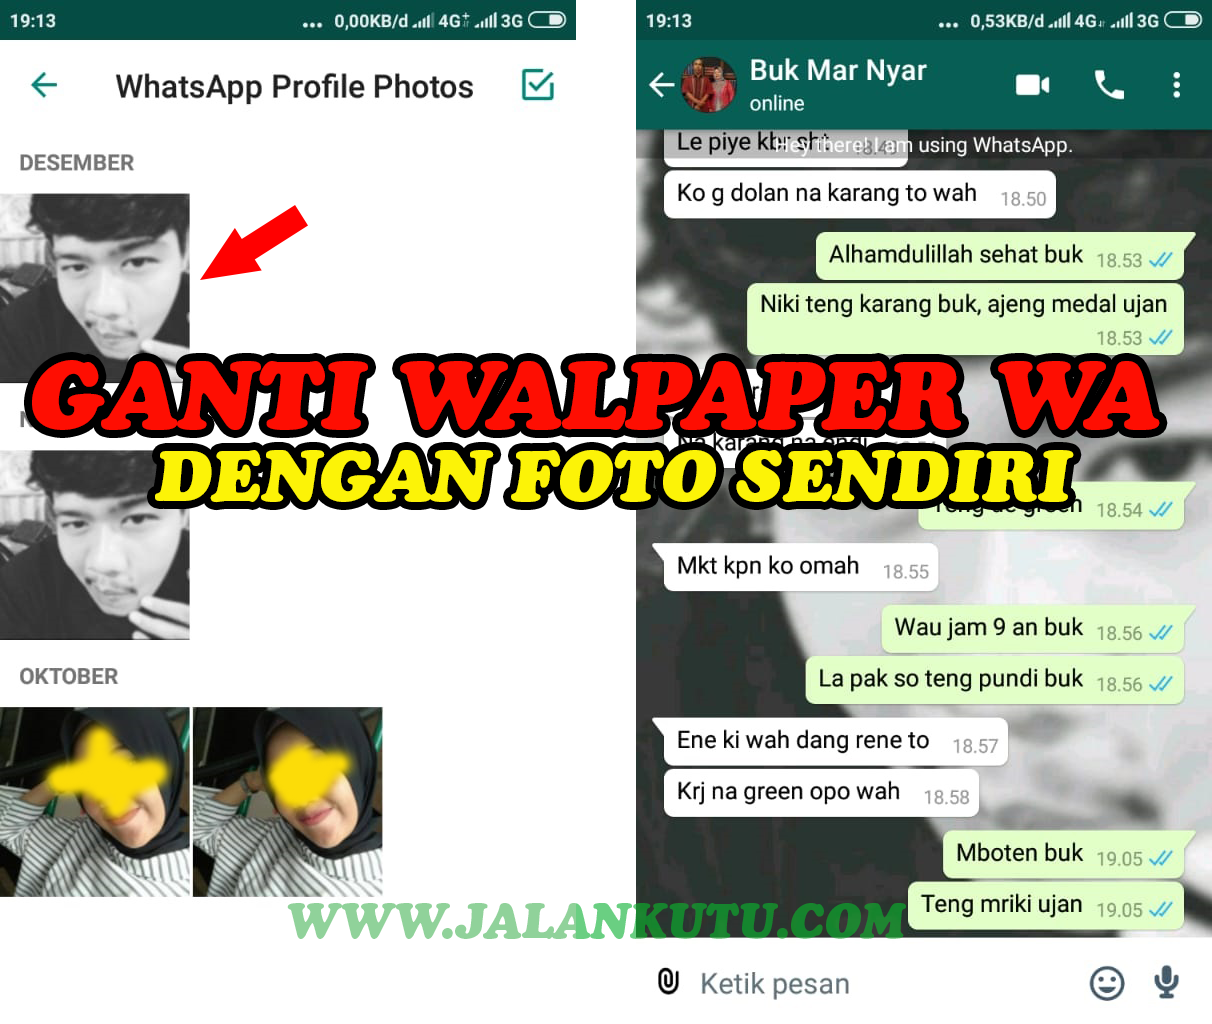  Cara  Mengganti  Wallpaper  Whatsapp dengan  Foto  Sendiri  